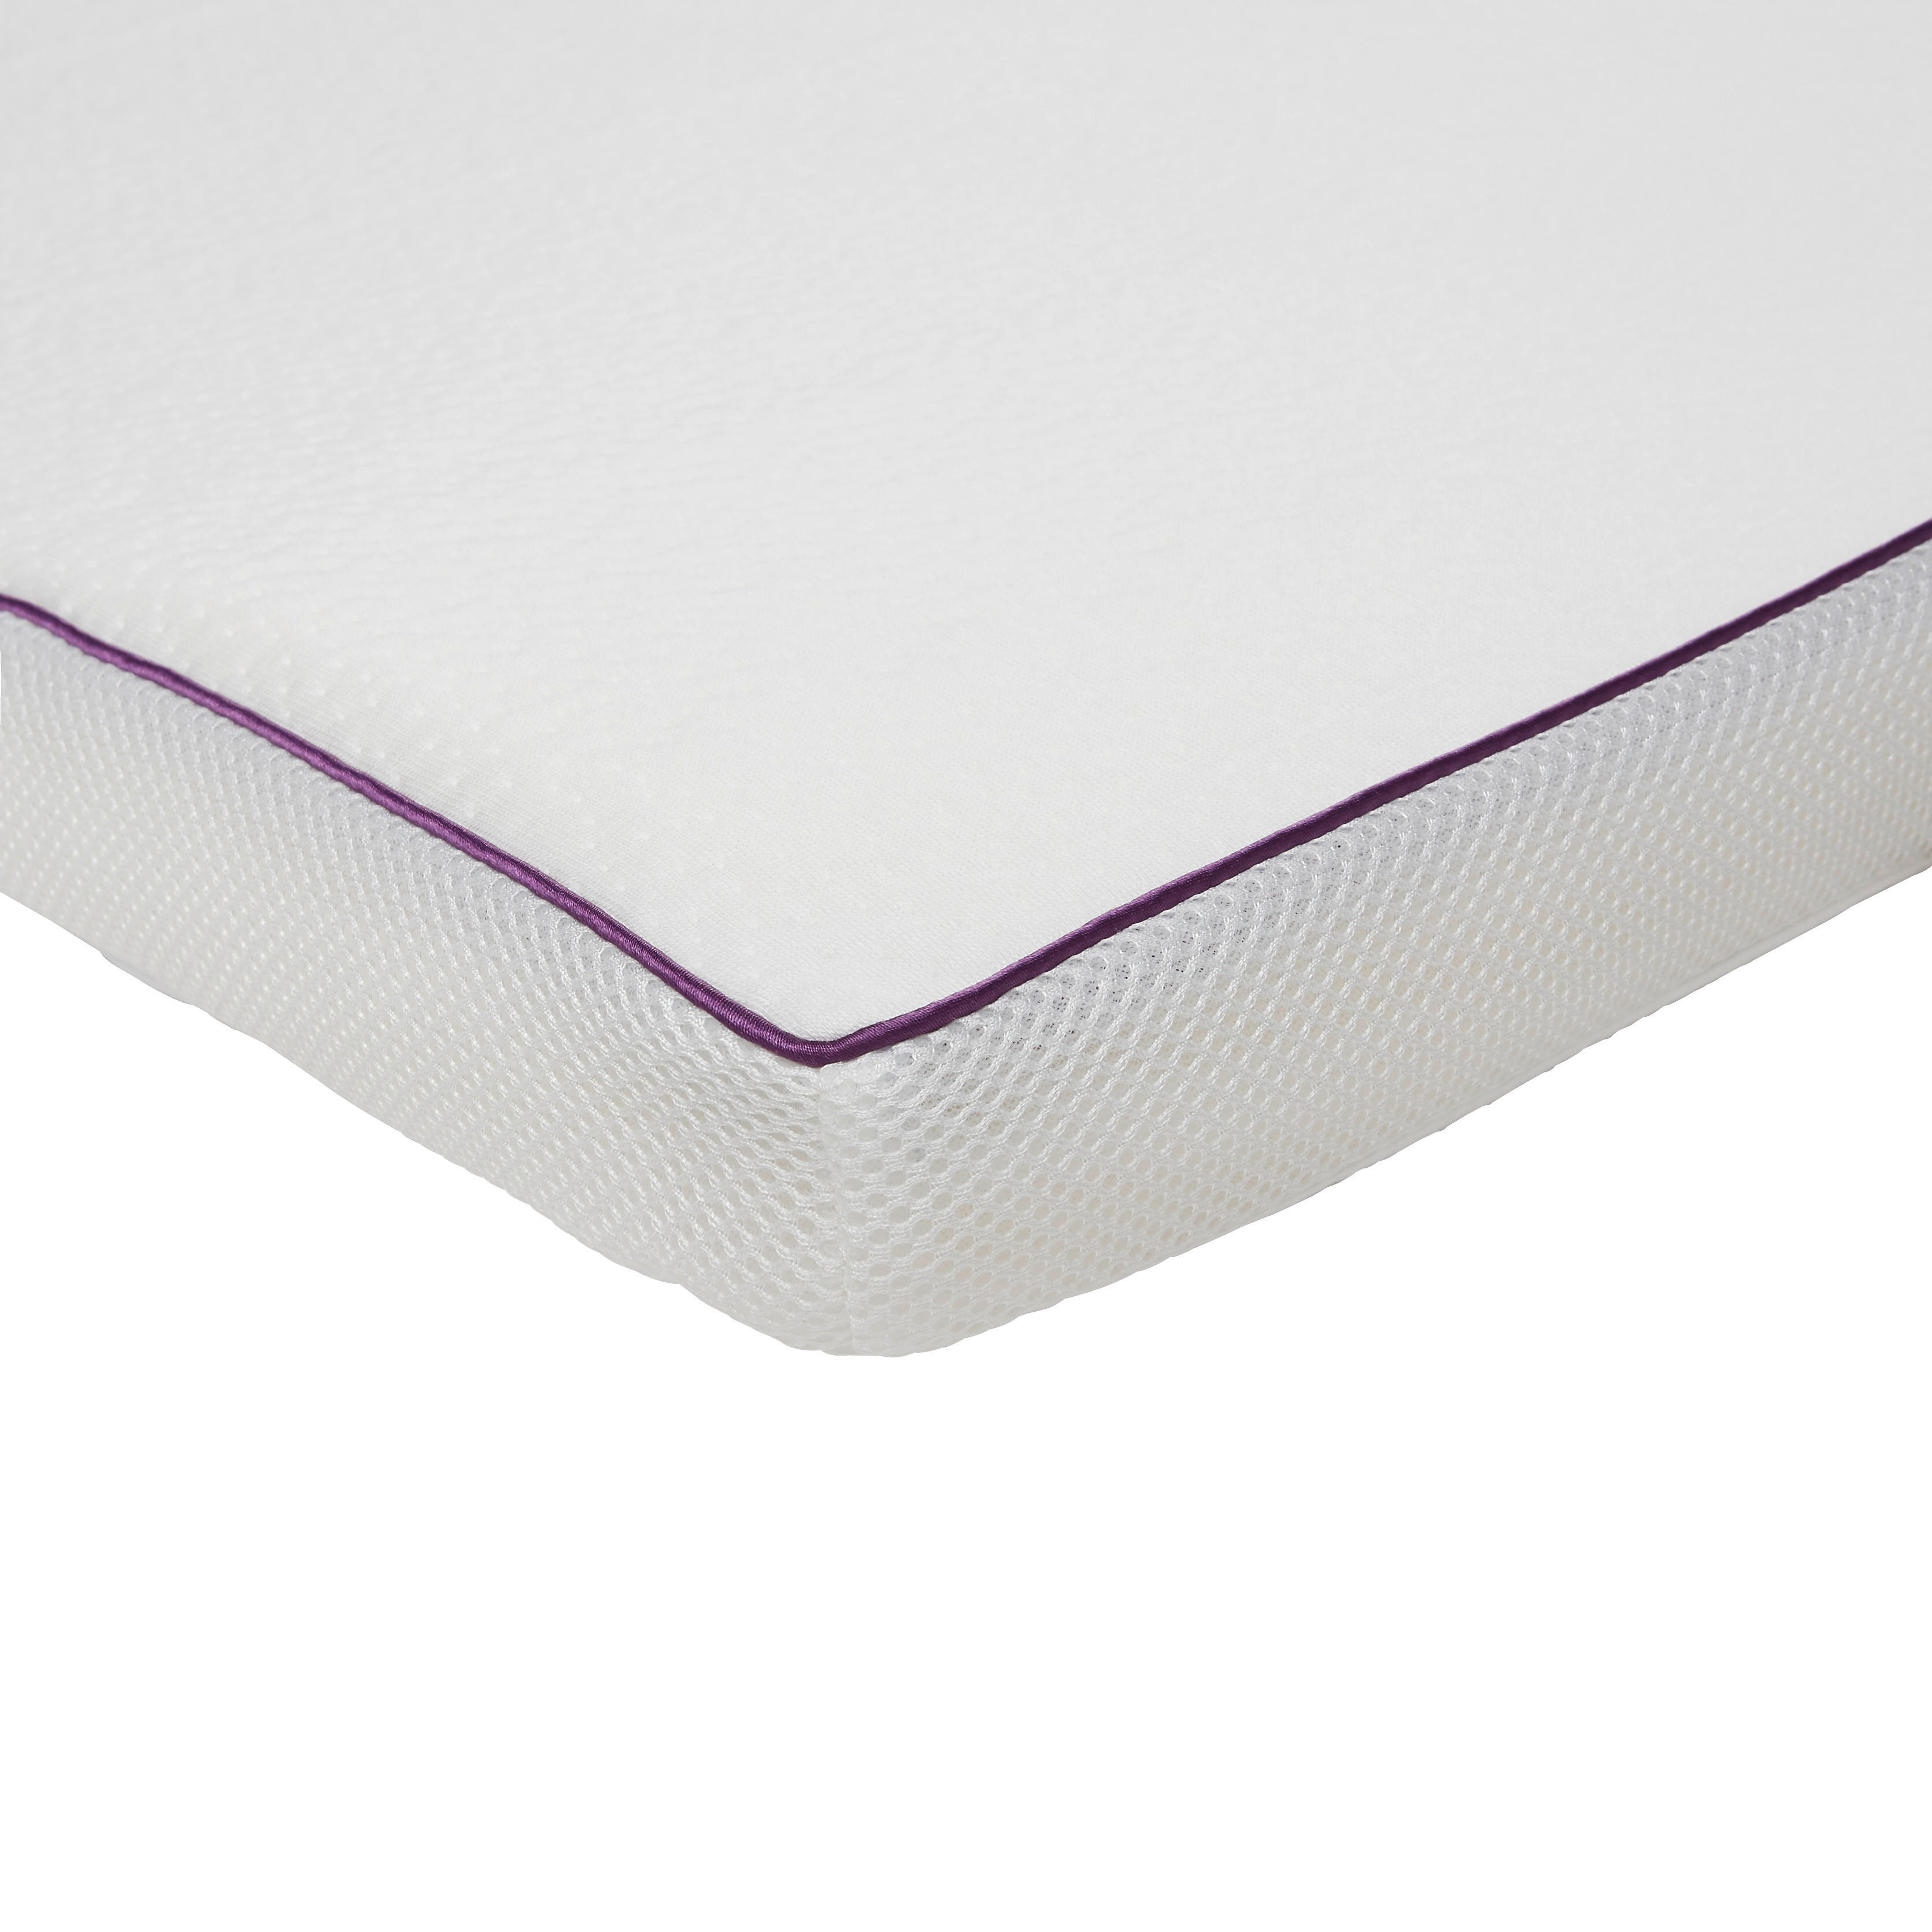 TOPPER 180/200 cm   - Weiß, Basics, Textil (180/200cm) - Sleeptex